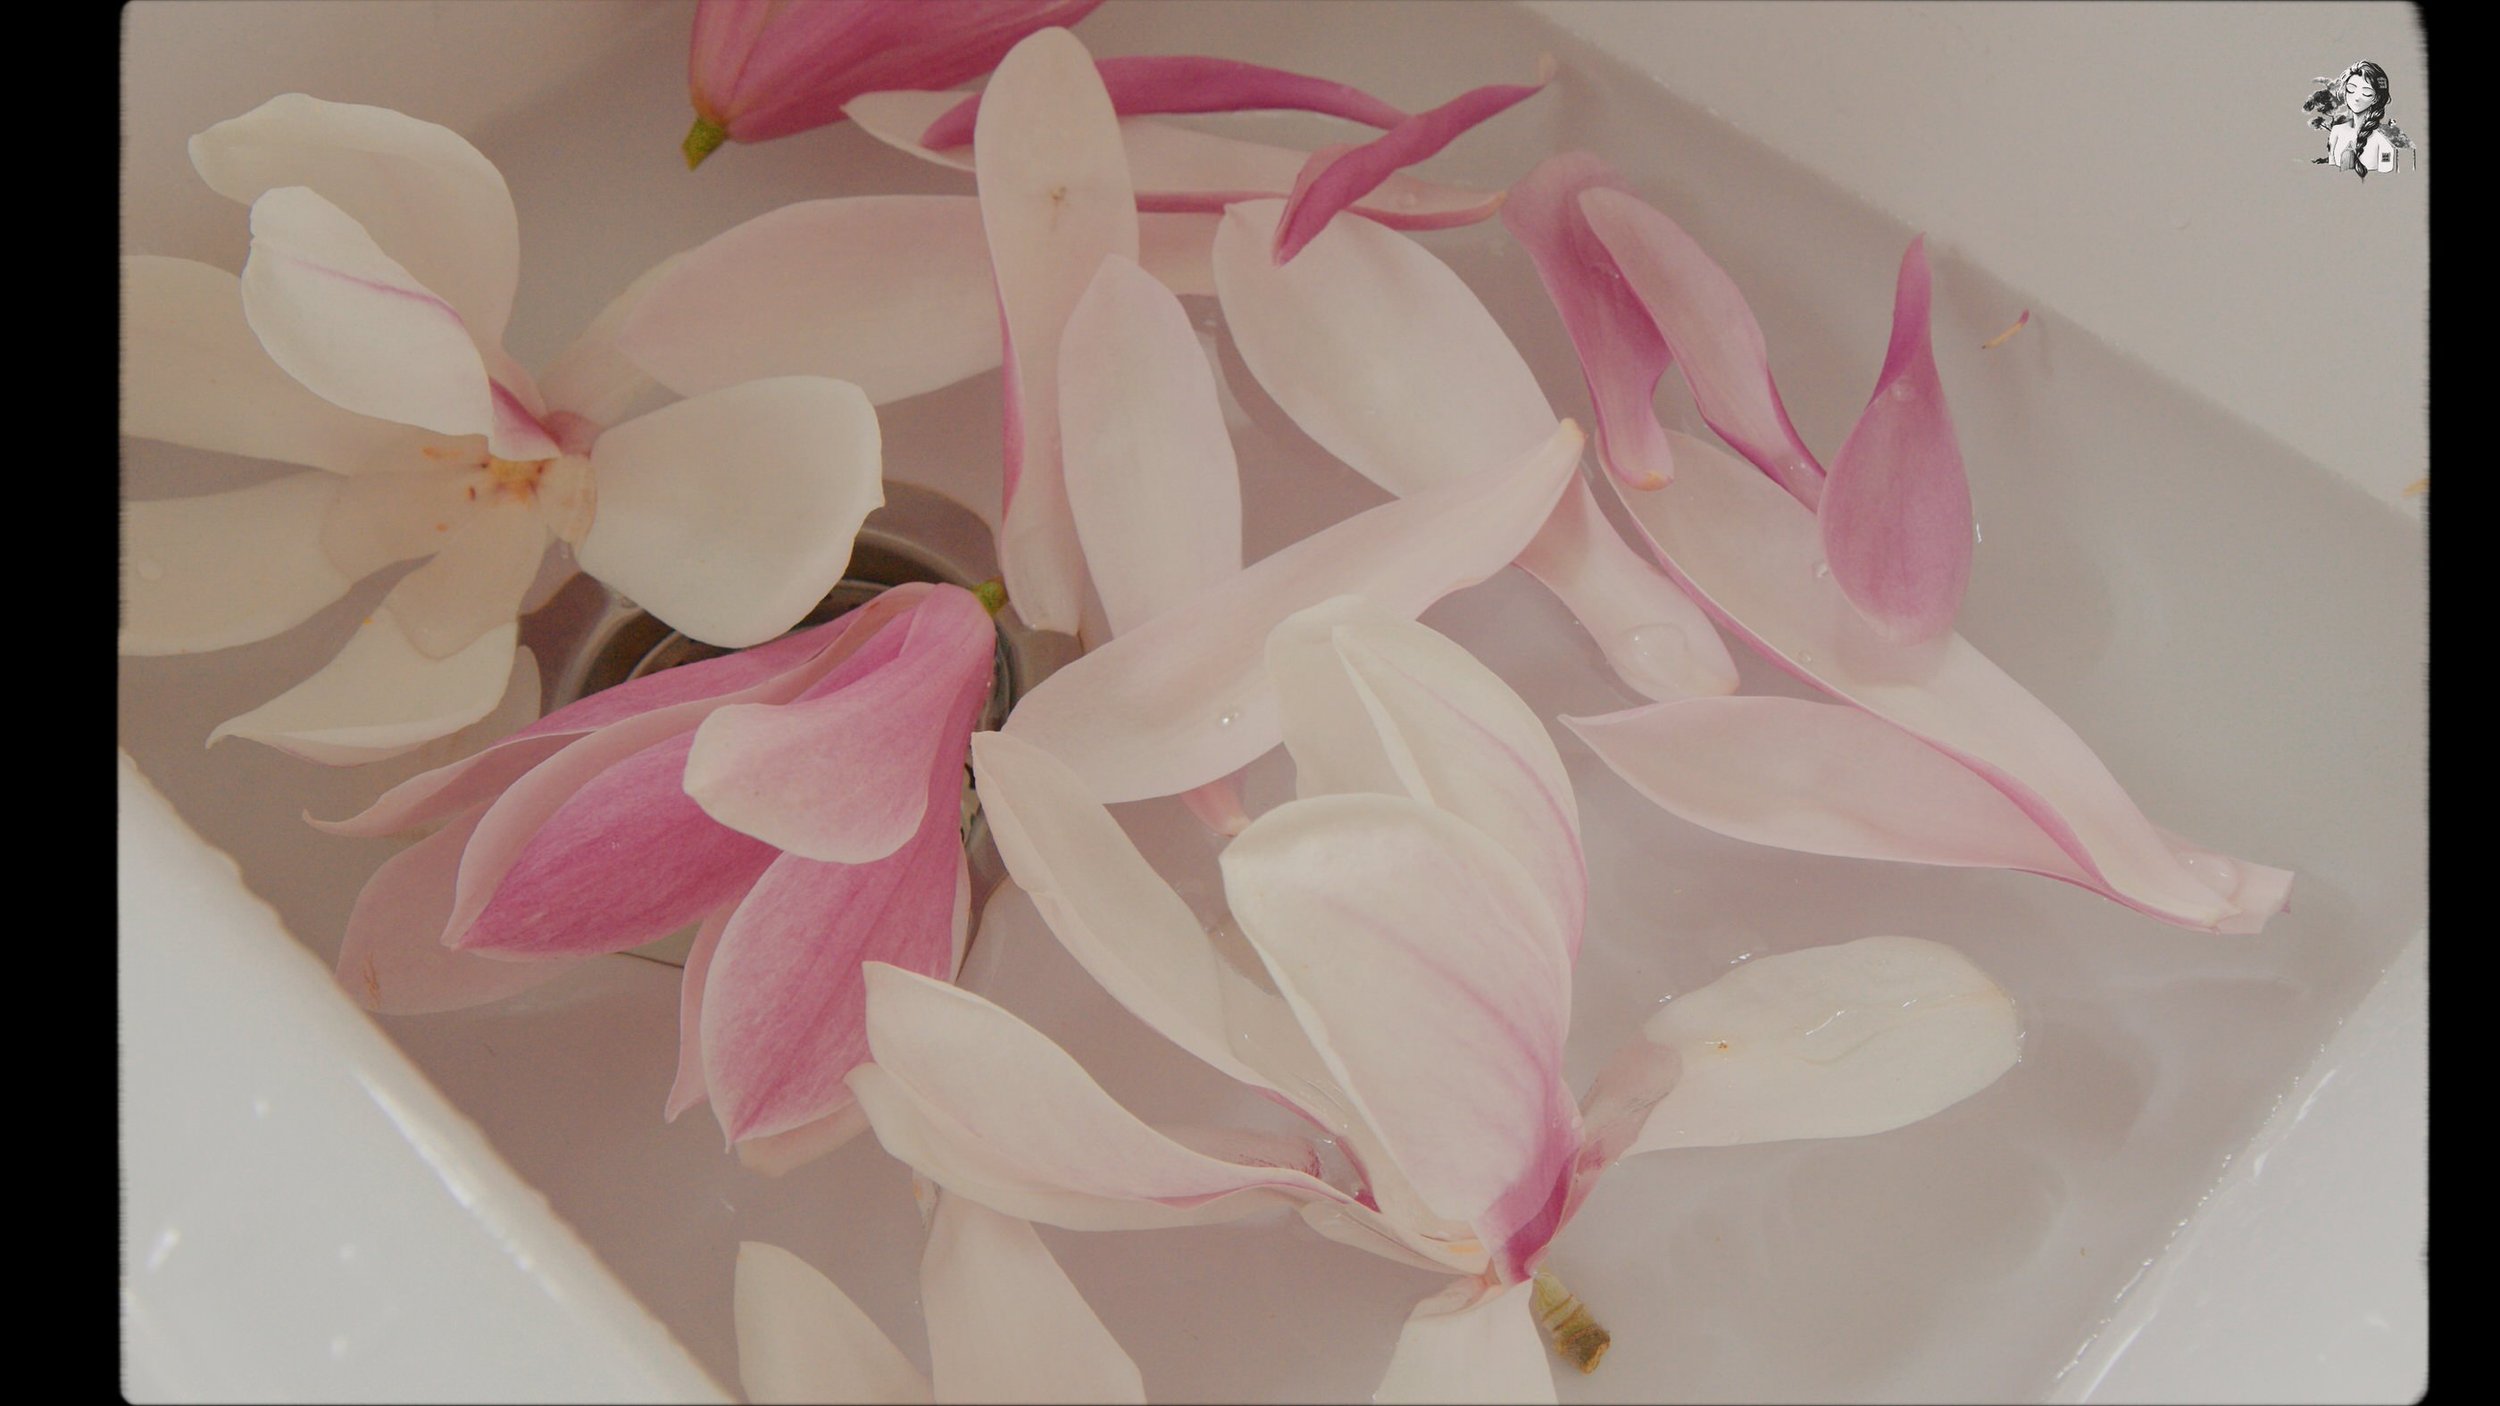 Finding Joy in Homemaking - Foraging Magnolia - Magnolia Tee - Magnolia Salad - Her86m2 _1.188.1.jpg